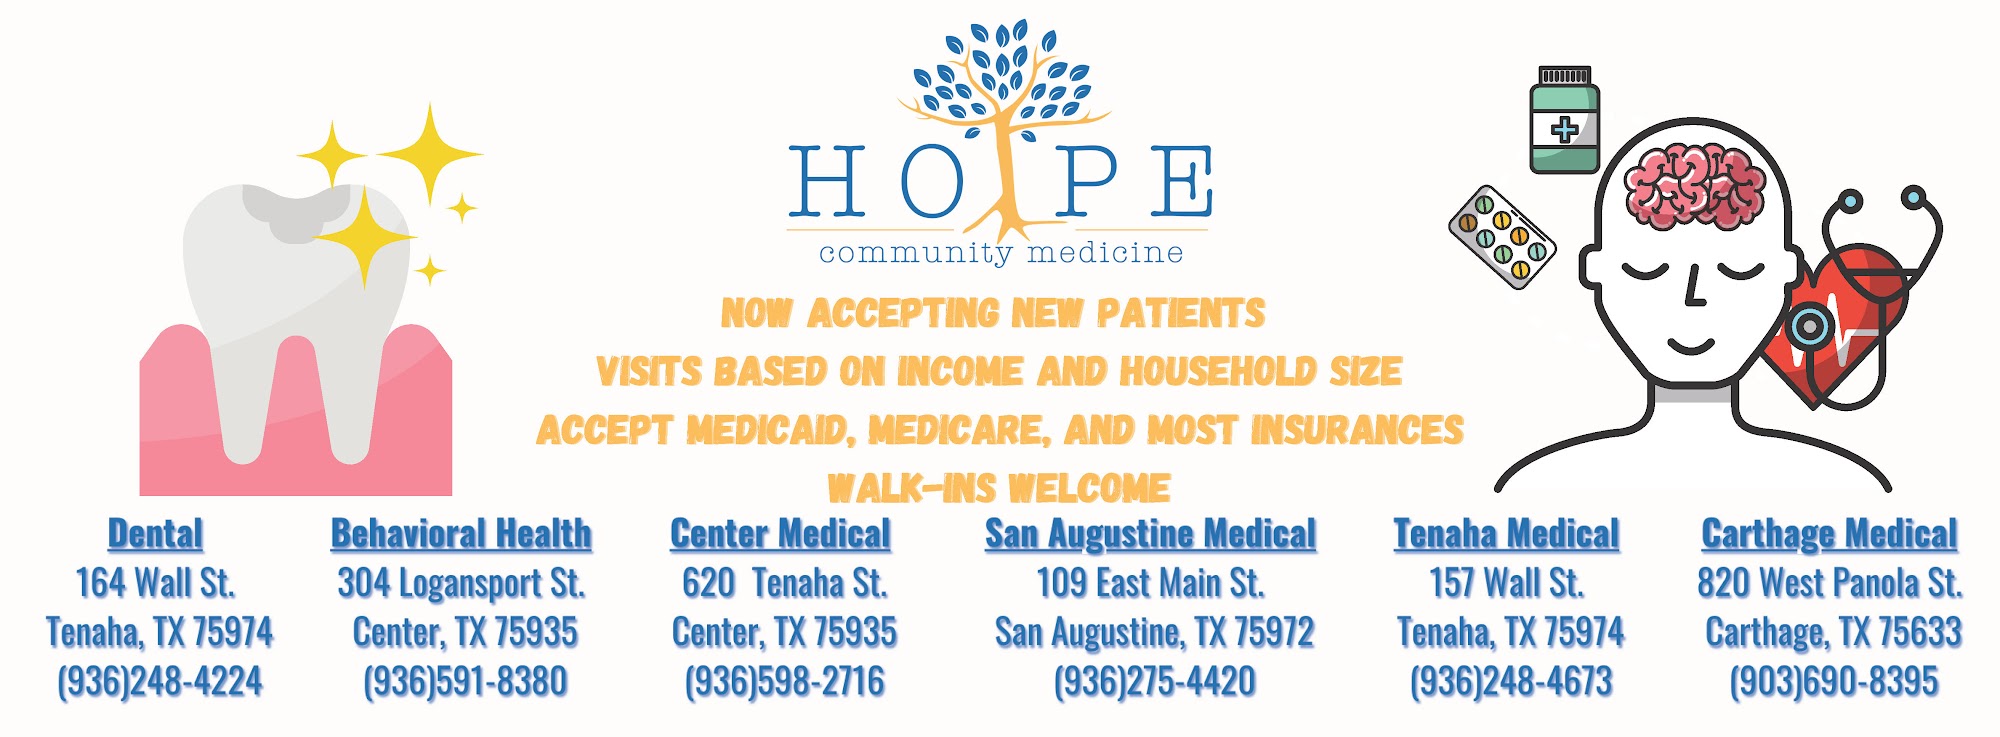 Hope Community Medicine - Carthage 820 W Panola St, Carthage Texas 75633